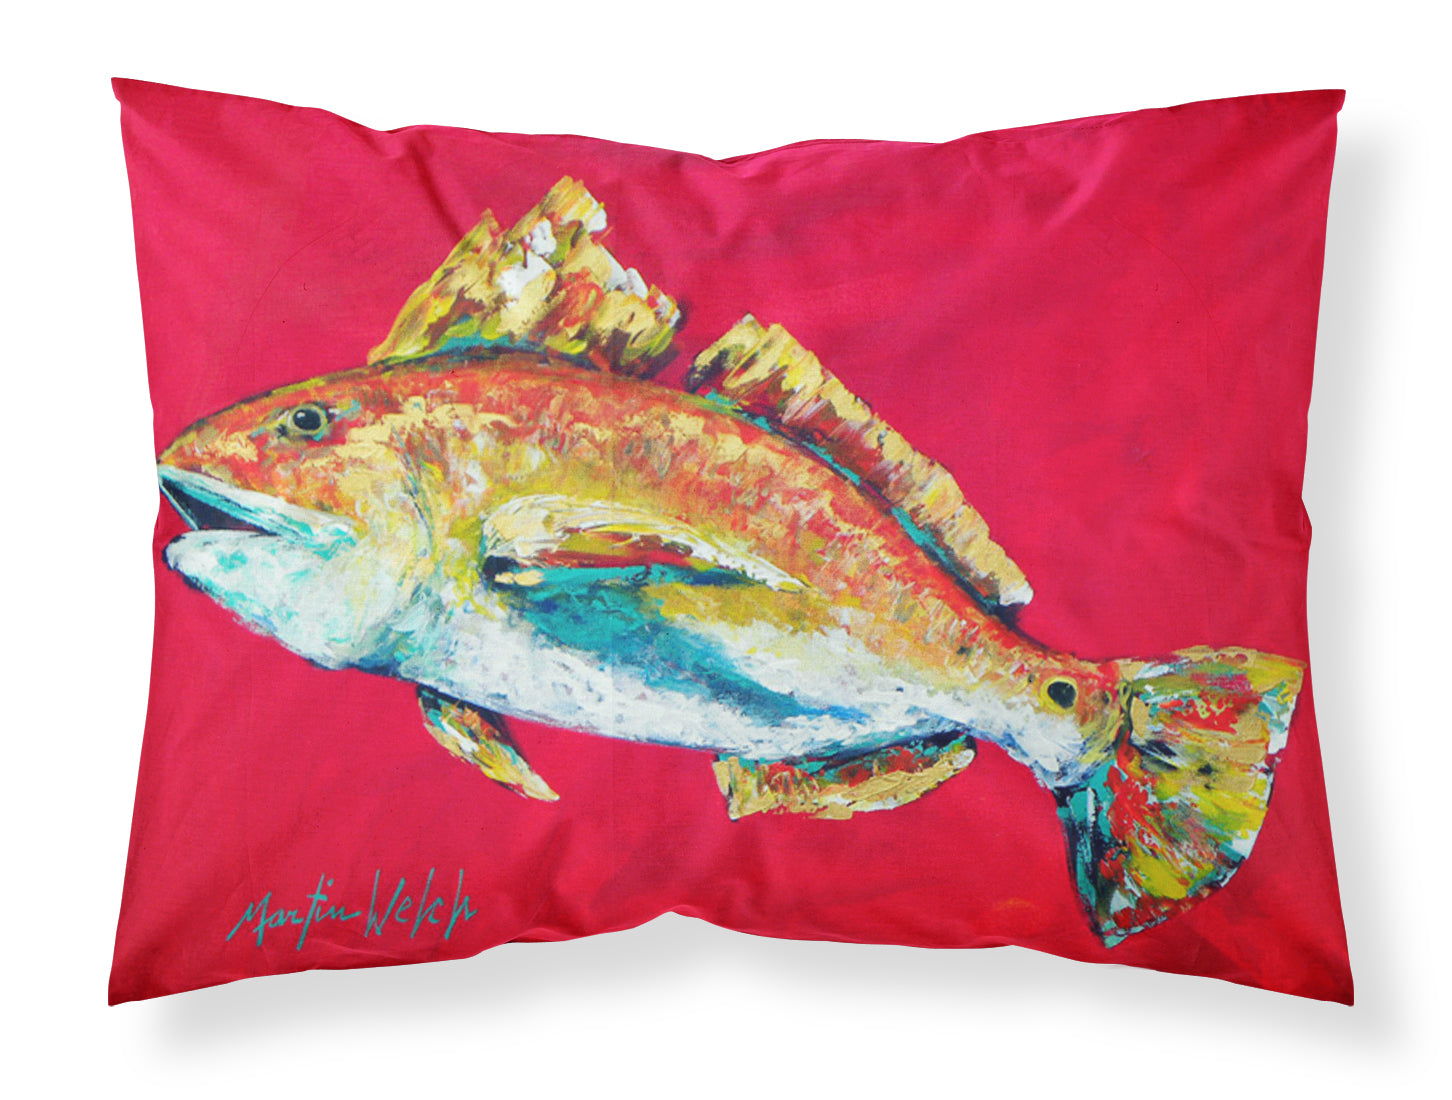 Buy this Fish - Red Fish Woo Hoo Fabric Standard Pillowcase